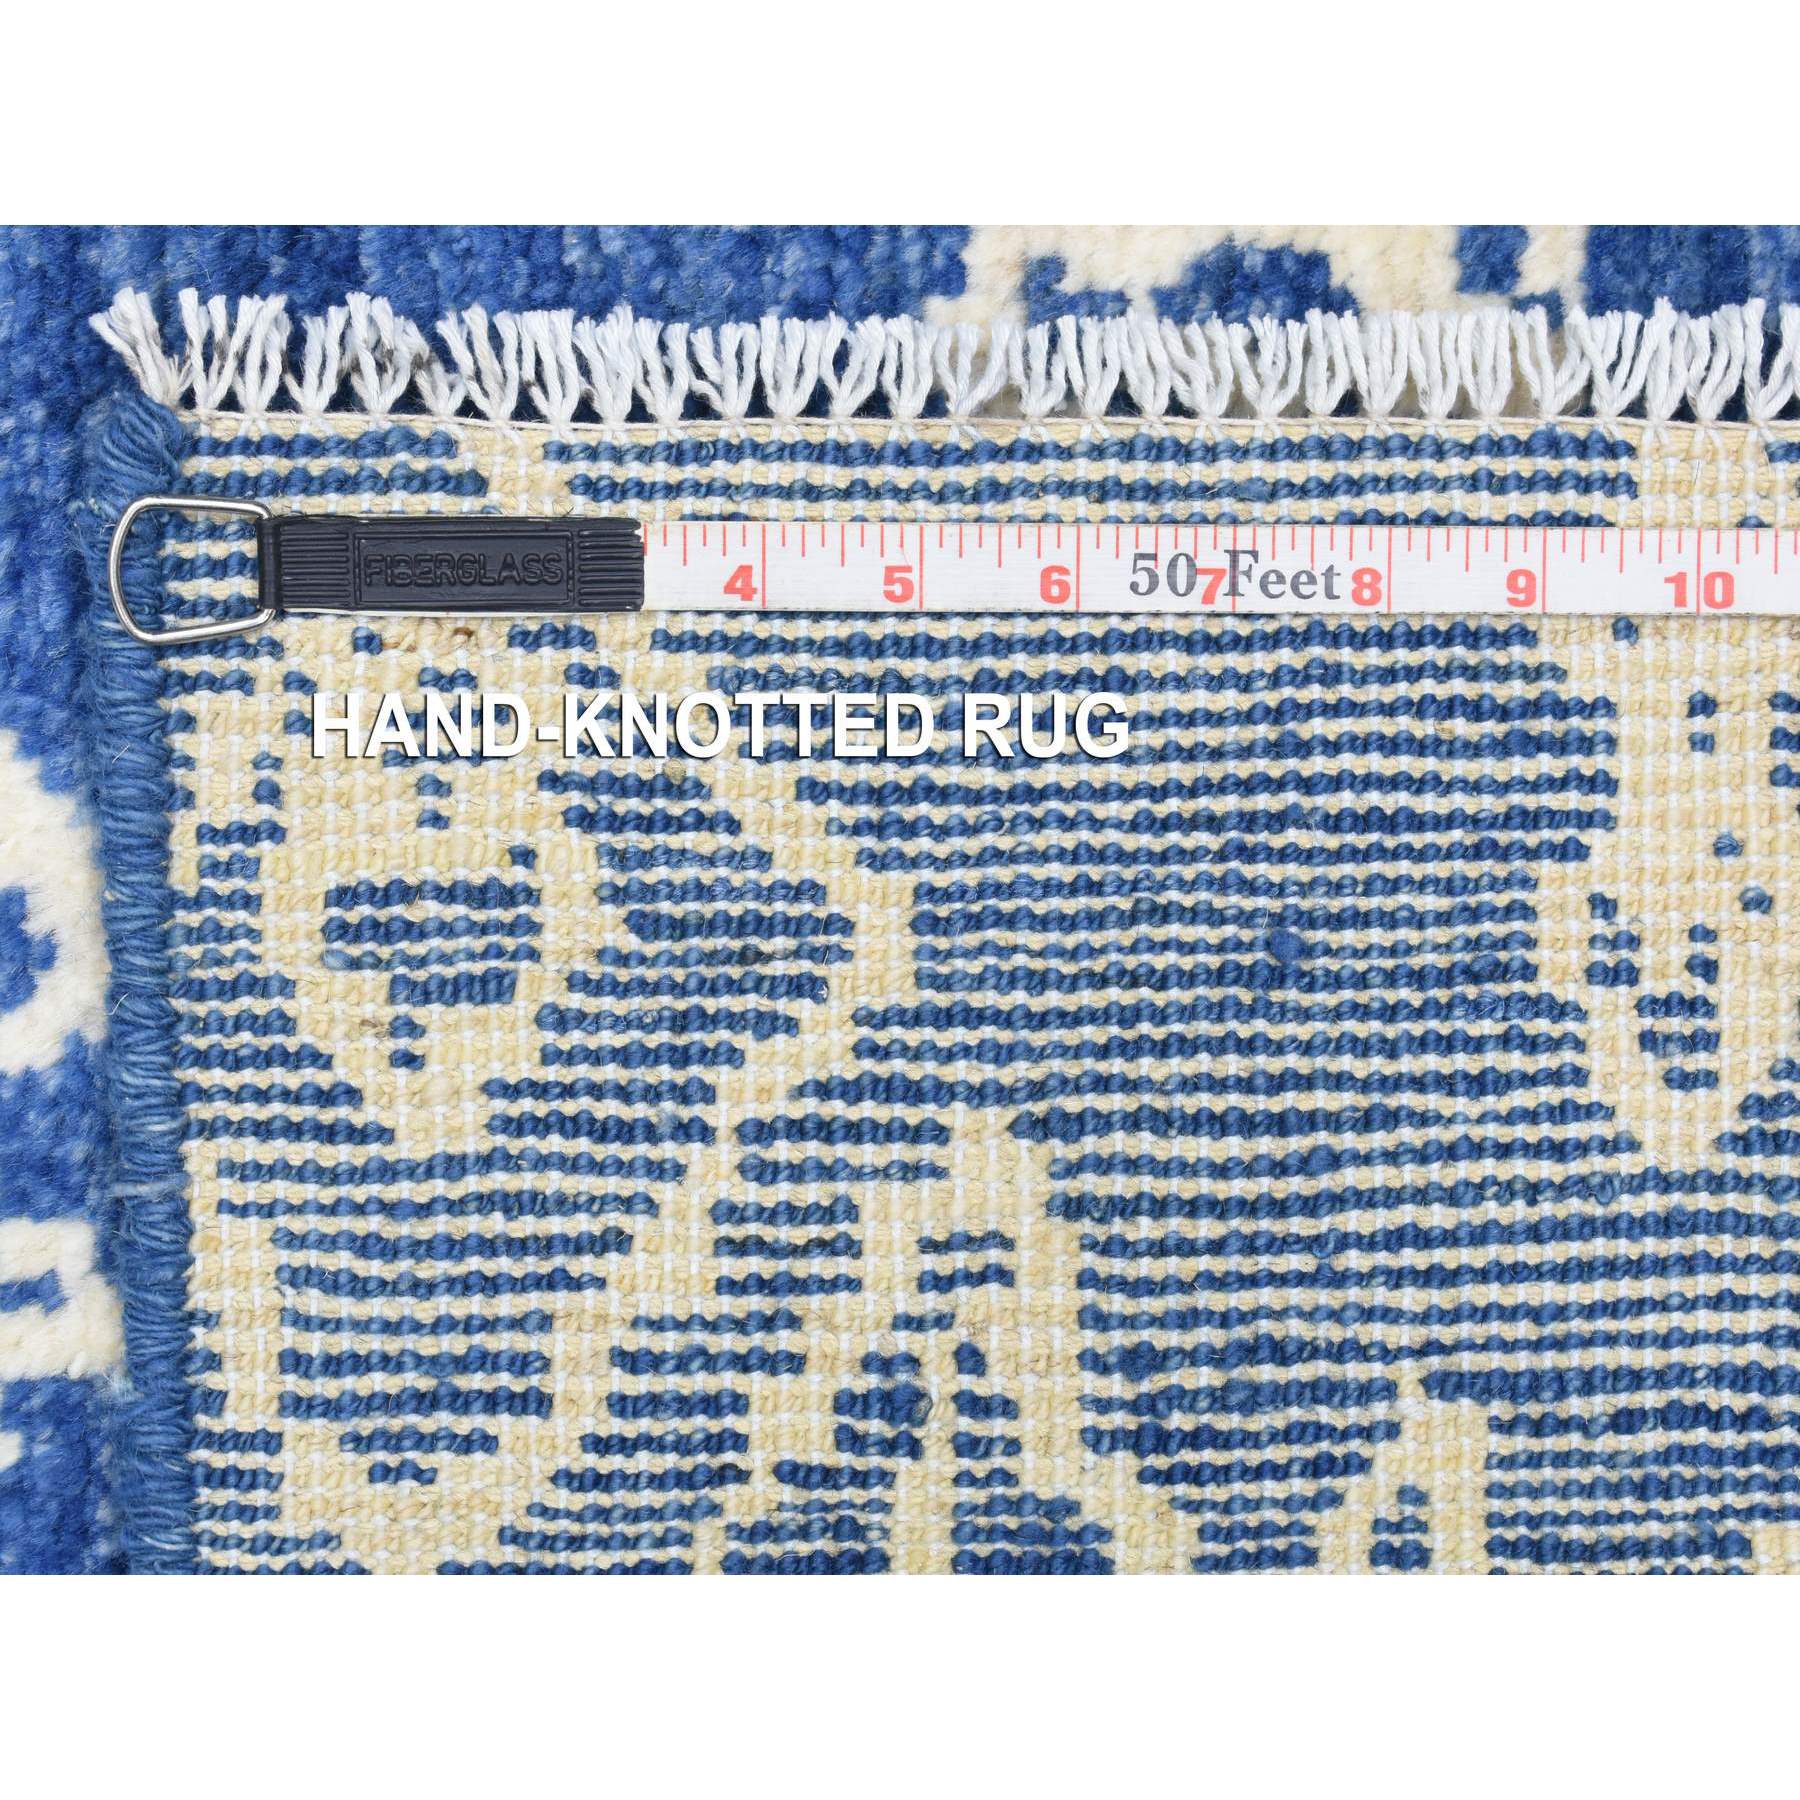 2'8"x15'4" Denim Blue, Soft Organic Wool Hand Woven, Boujaad Moroccan Berber Design with Geometric Triangular Design, Natural Dyes, Runner Oriental Rug 